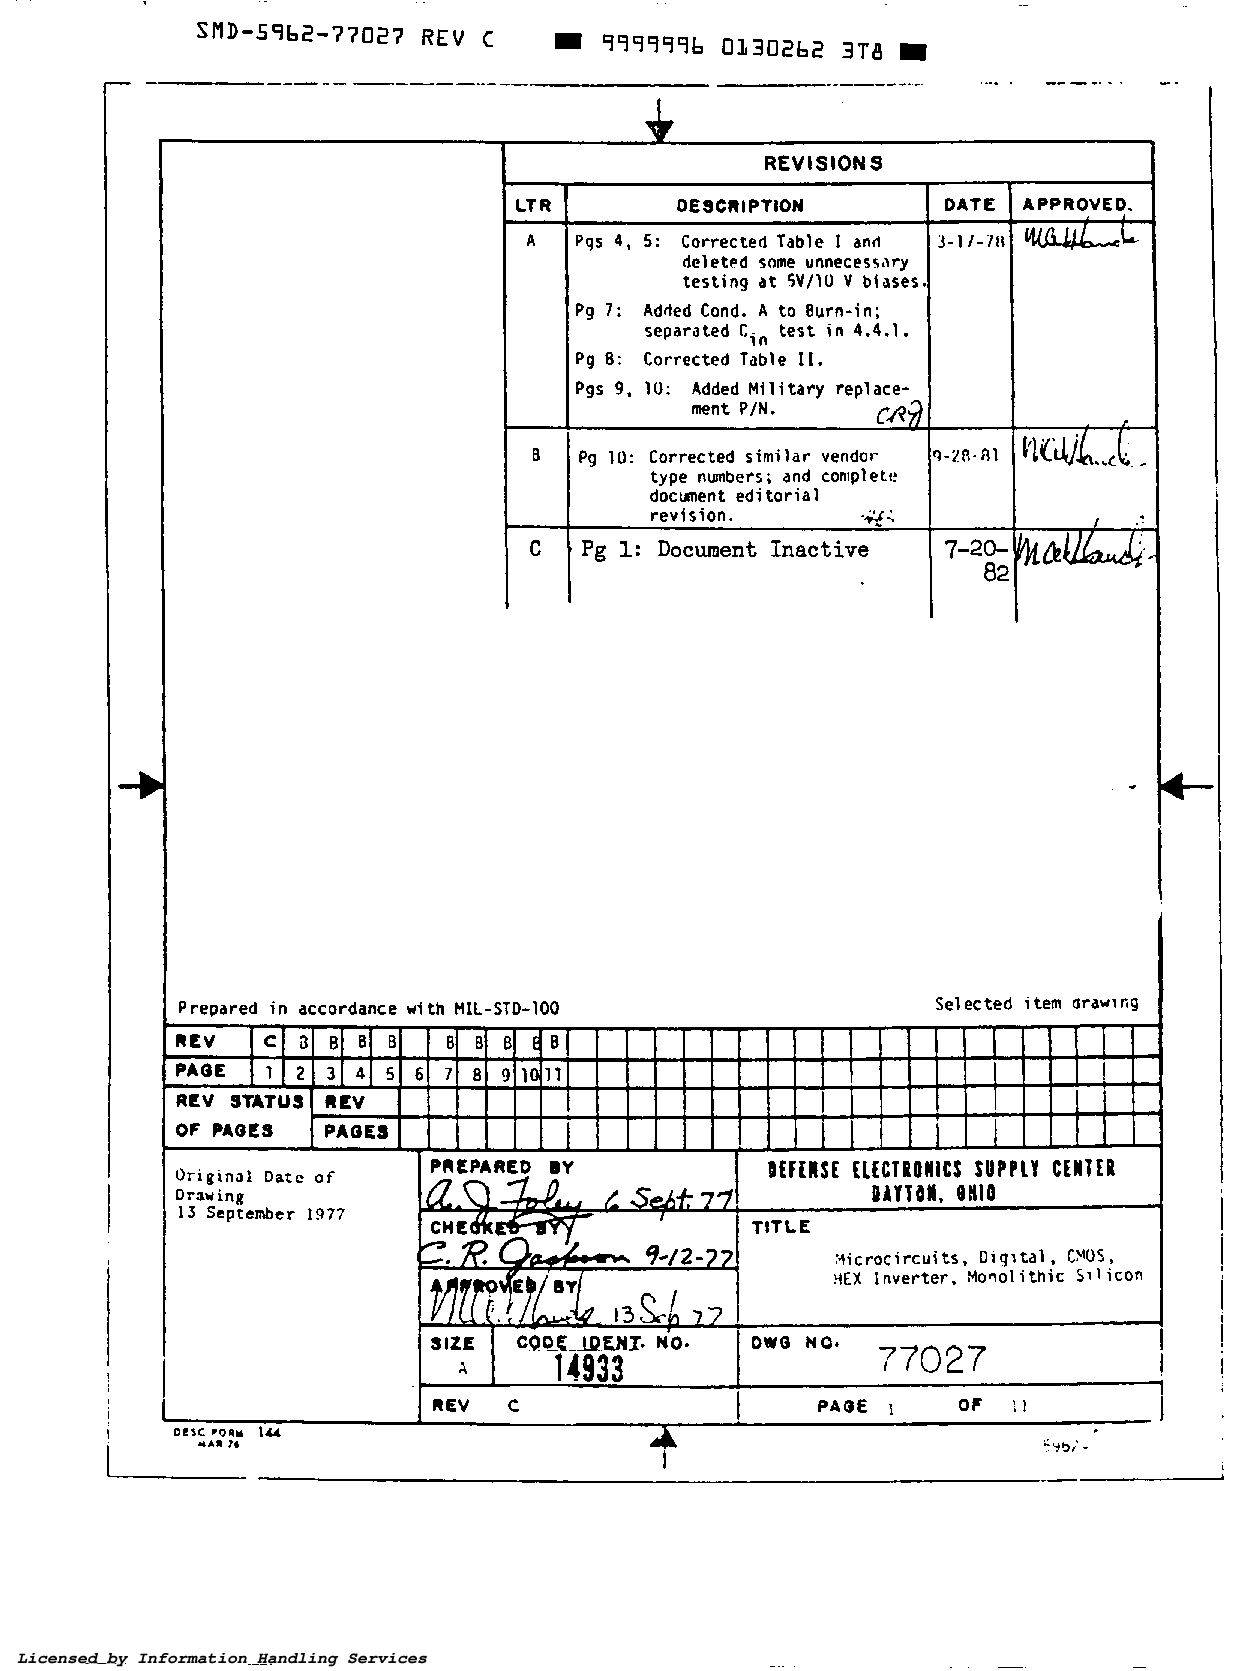 DLA SMD-5962-77027 REV C-1982封面图